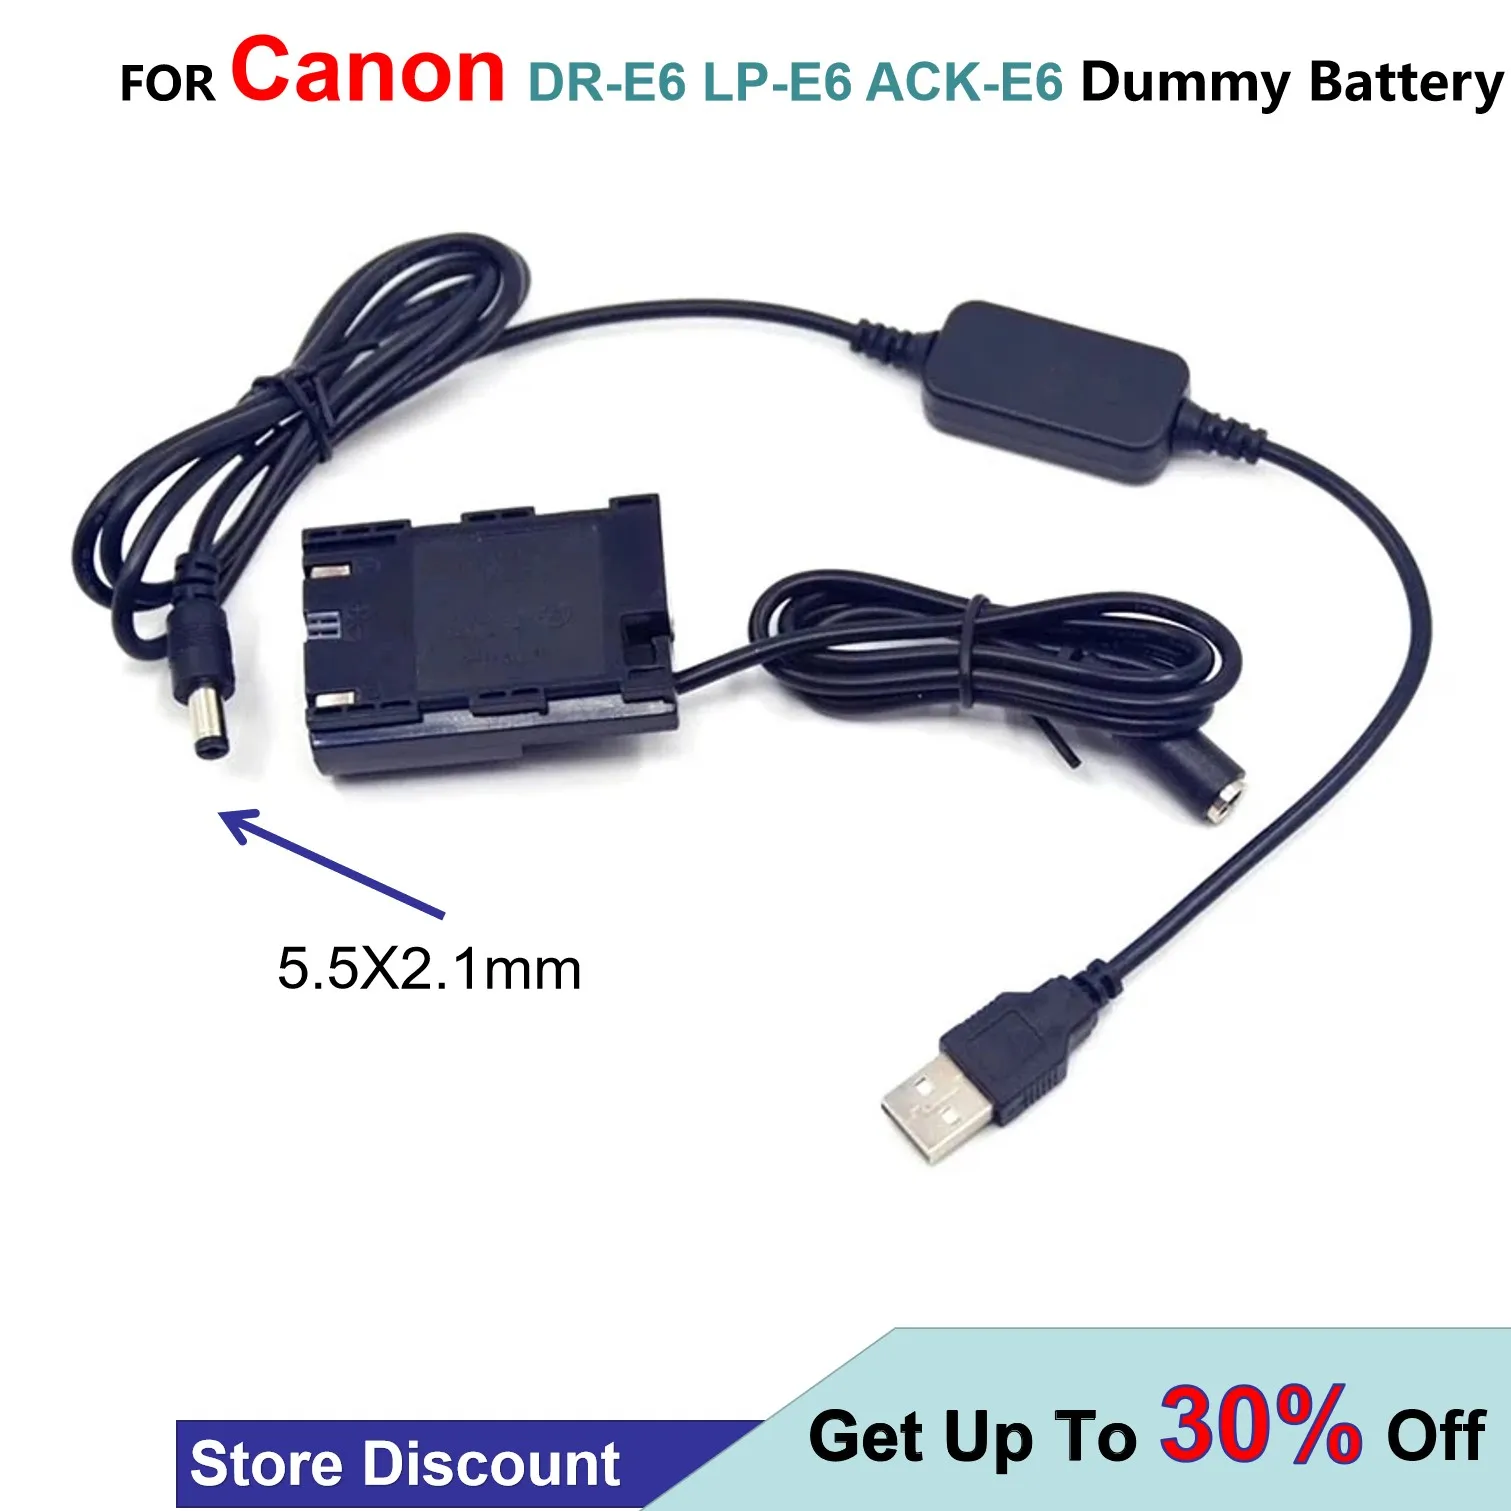 

LP-E6 DR-E6 ACK-E6 AC-E6 Power Bank 5V USB Cable Adapter + FULL DECODED For Canon EOS 5D Mark II III 5D2 5D3 6D 7D 60D SLR Came